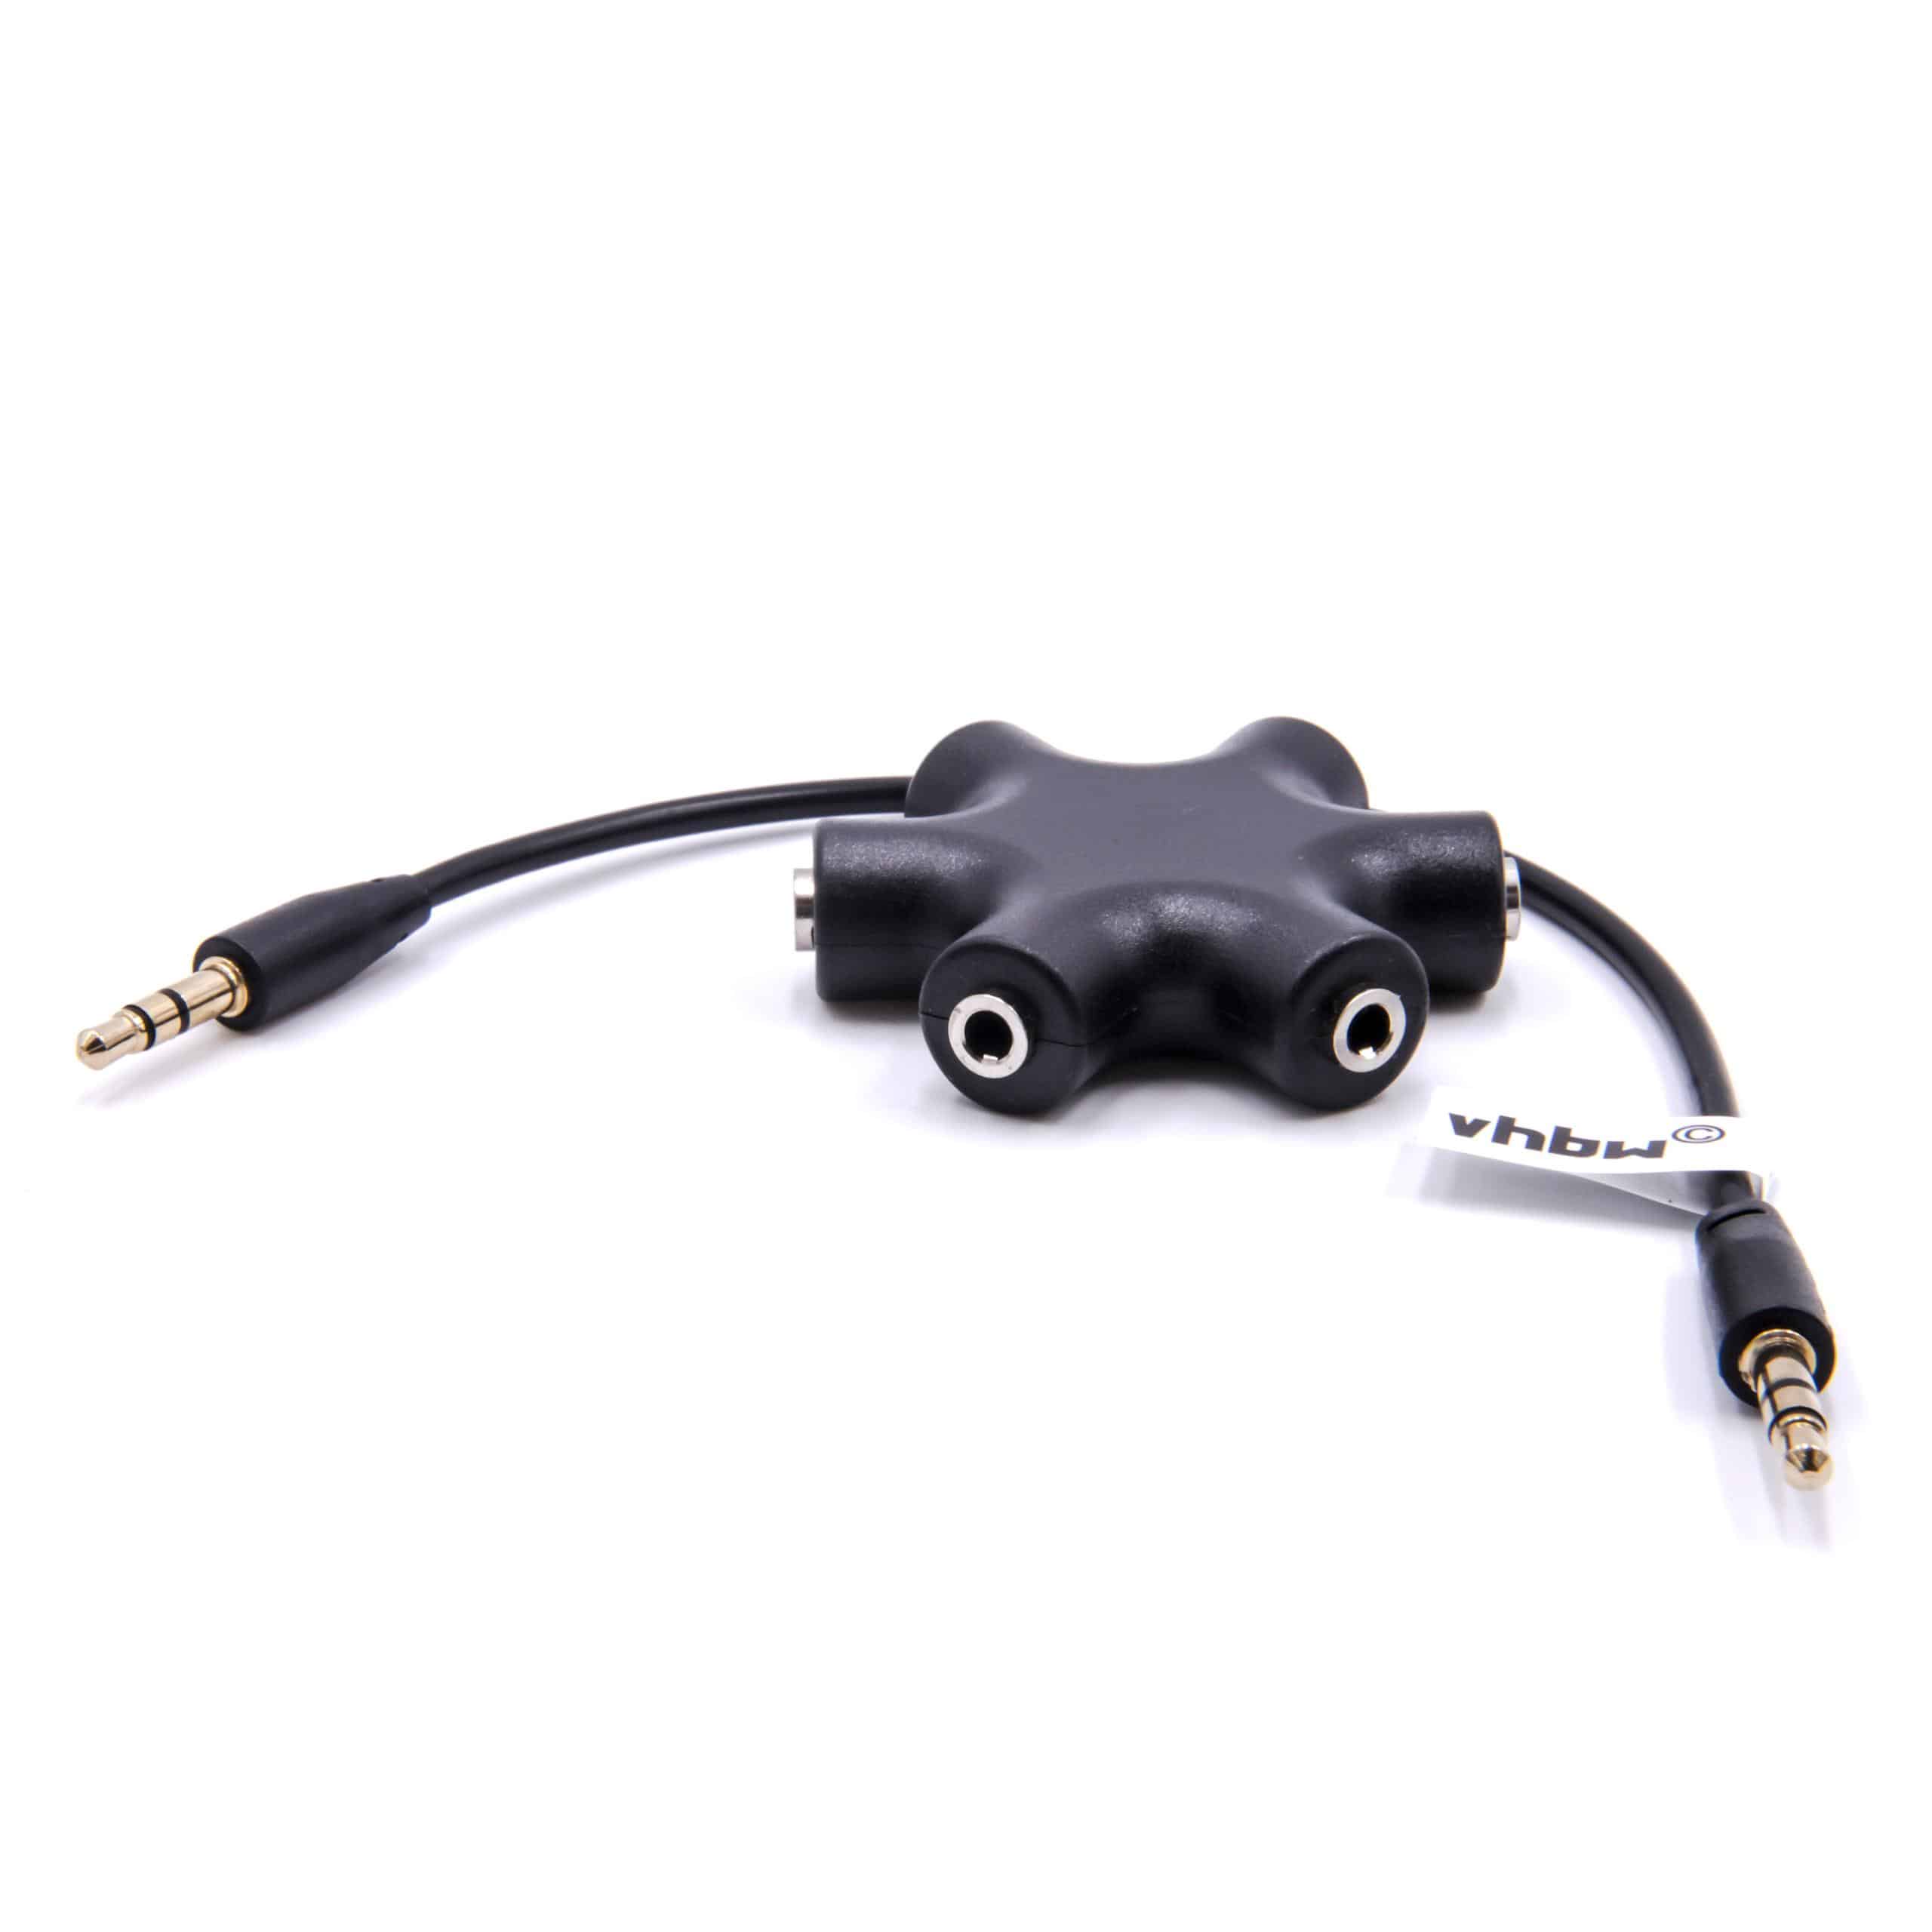 vhbw Multi Audio Splitter 5-Way AUX Headphone Splitter black for Headphones, Speakers, Devices with 3.5mm Audi